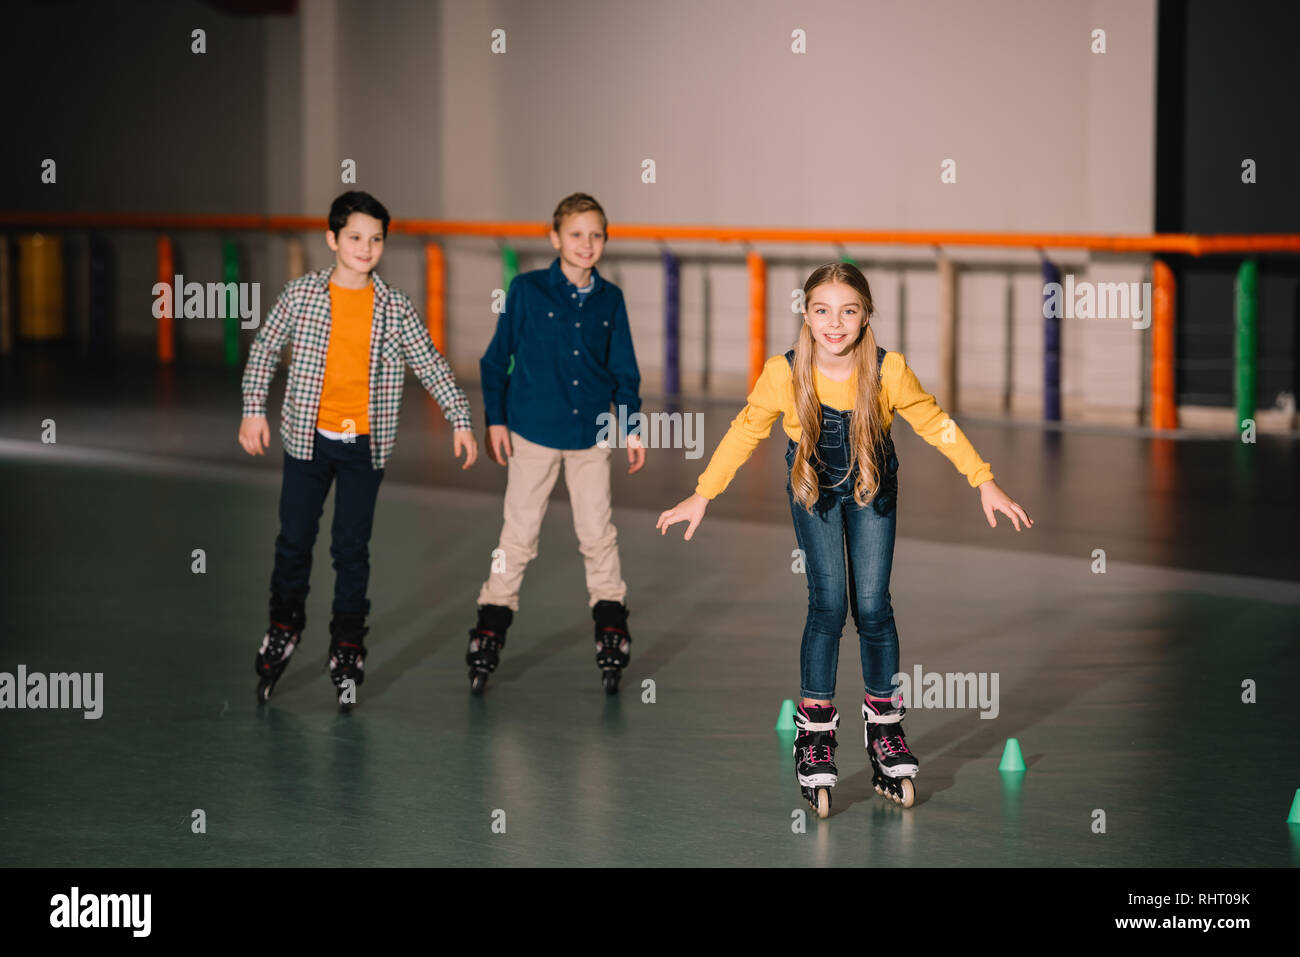 Smiling kids in roller skates training on rink Stock Photo